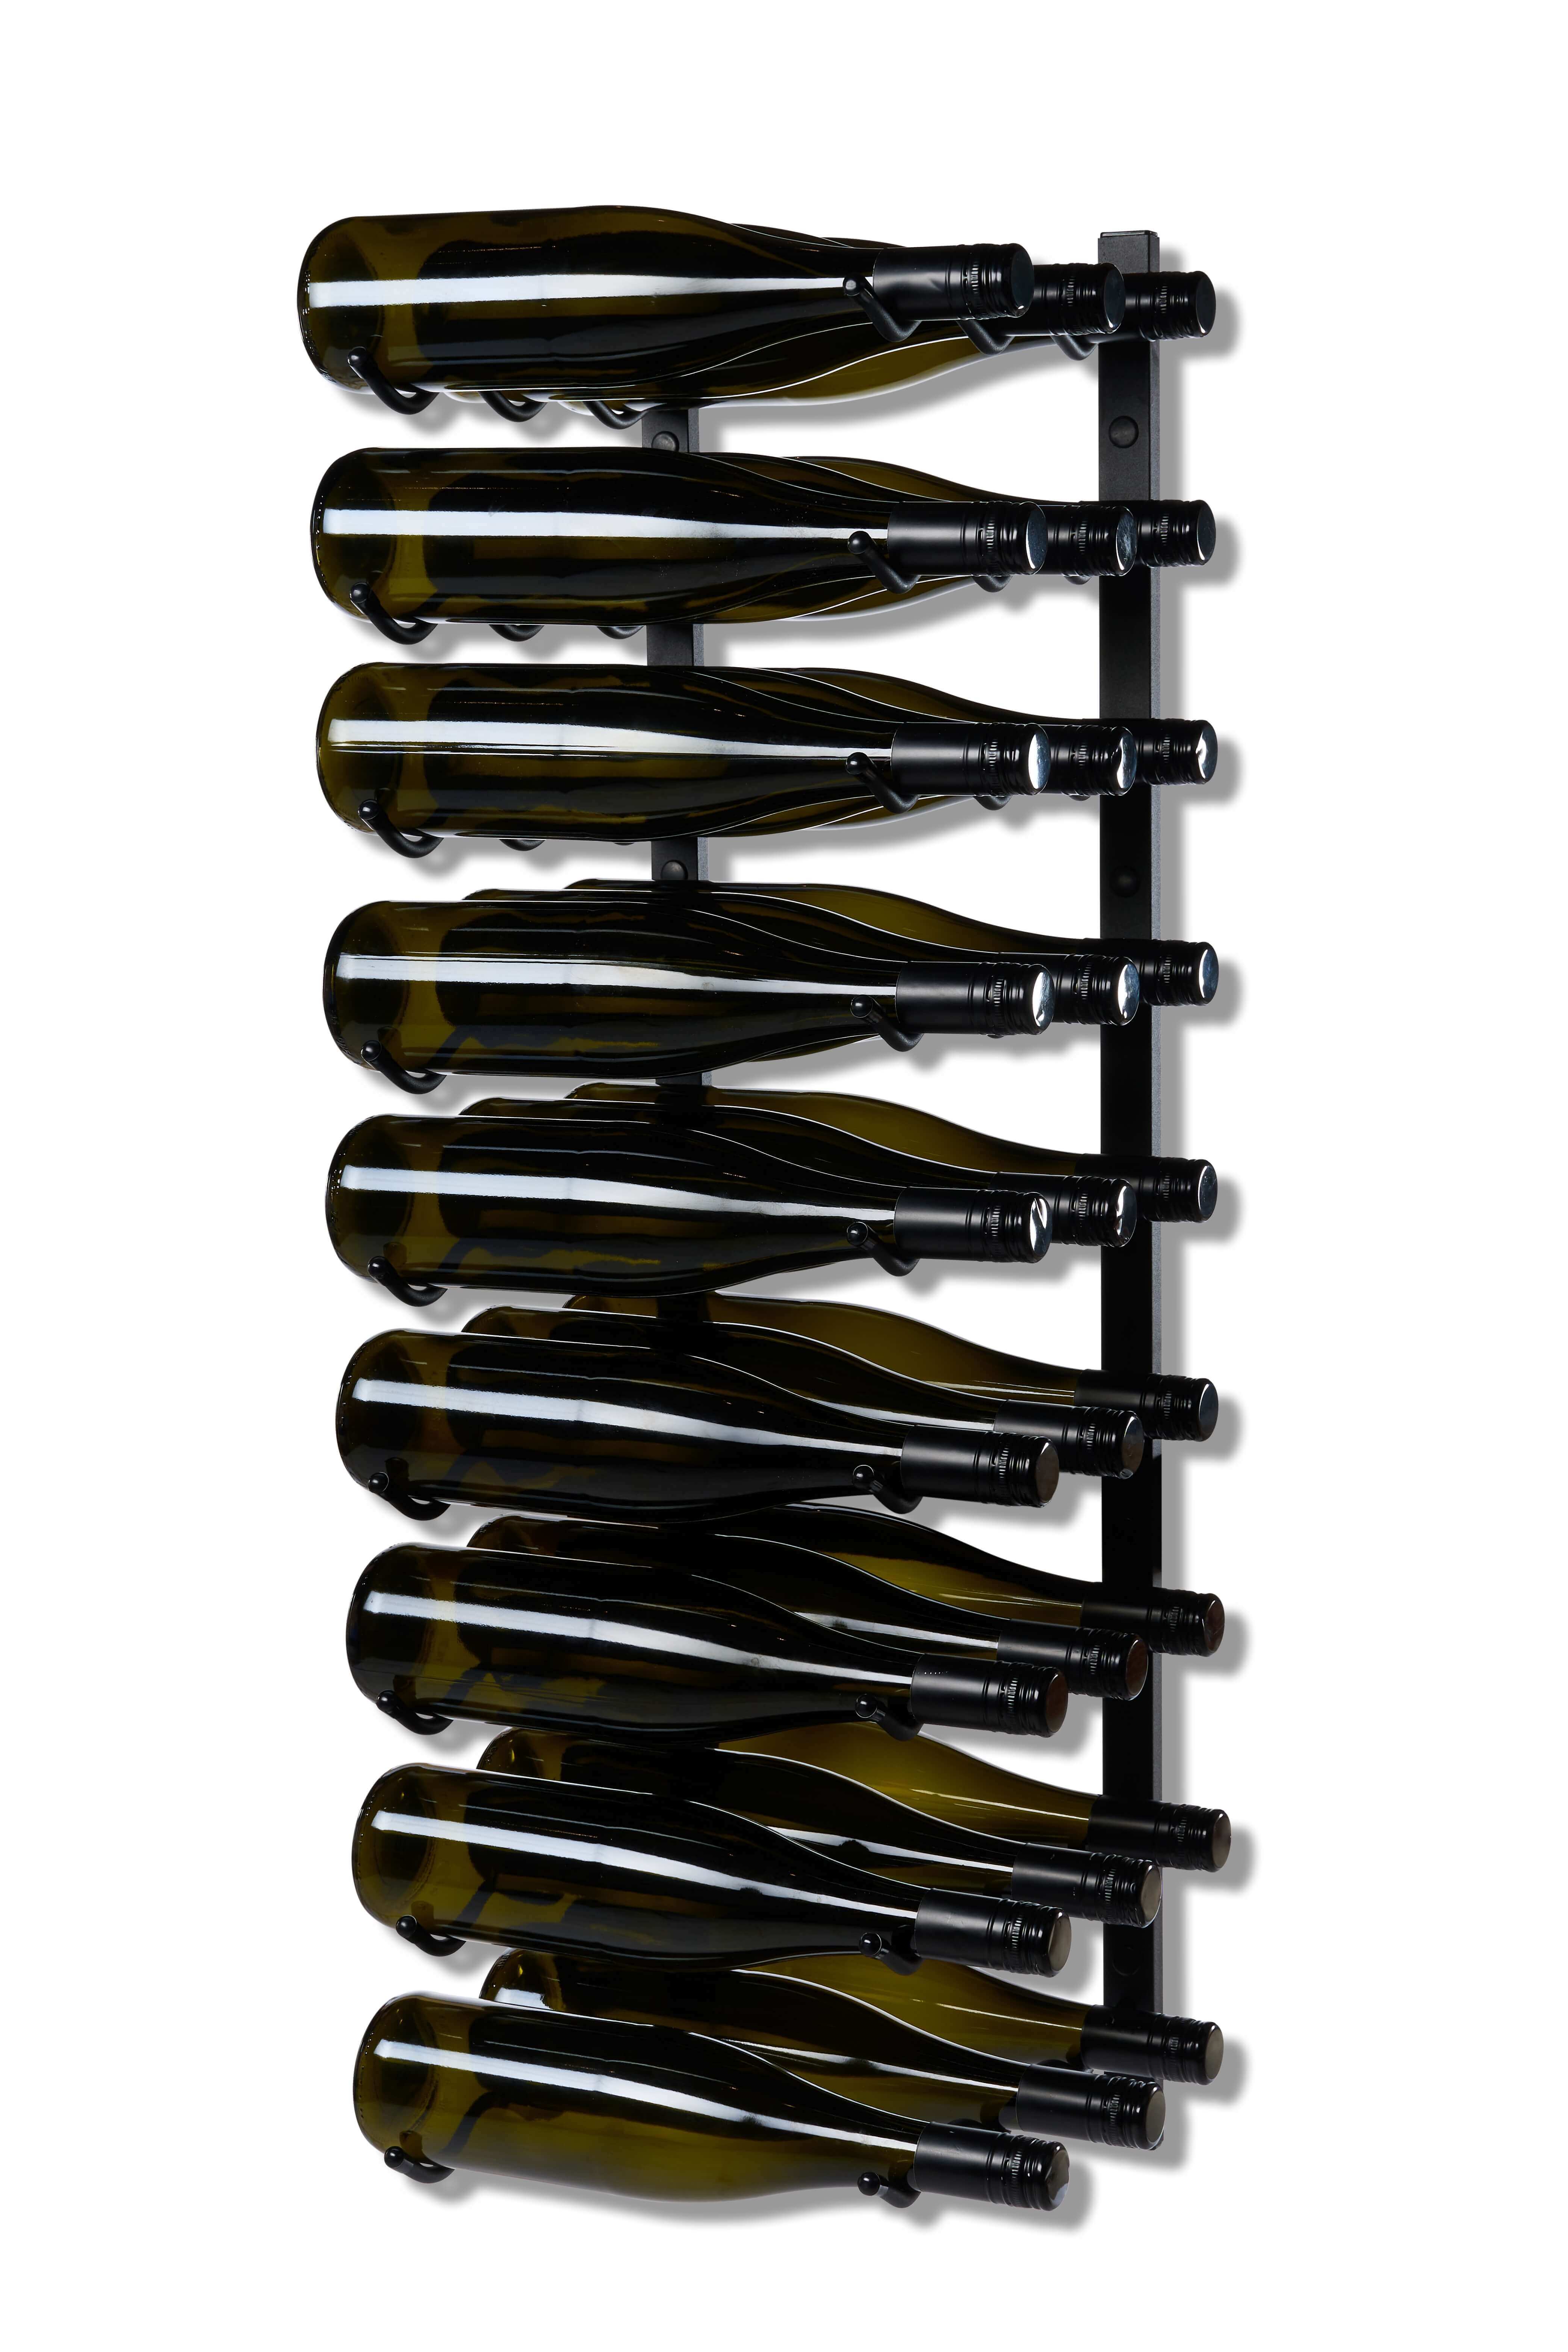 Godimento Rack vinreol - 3x9 flasker